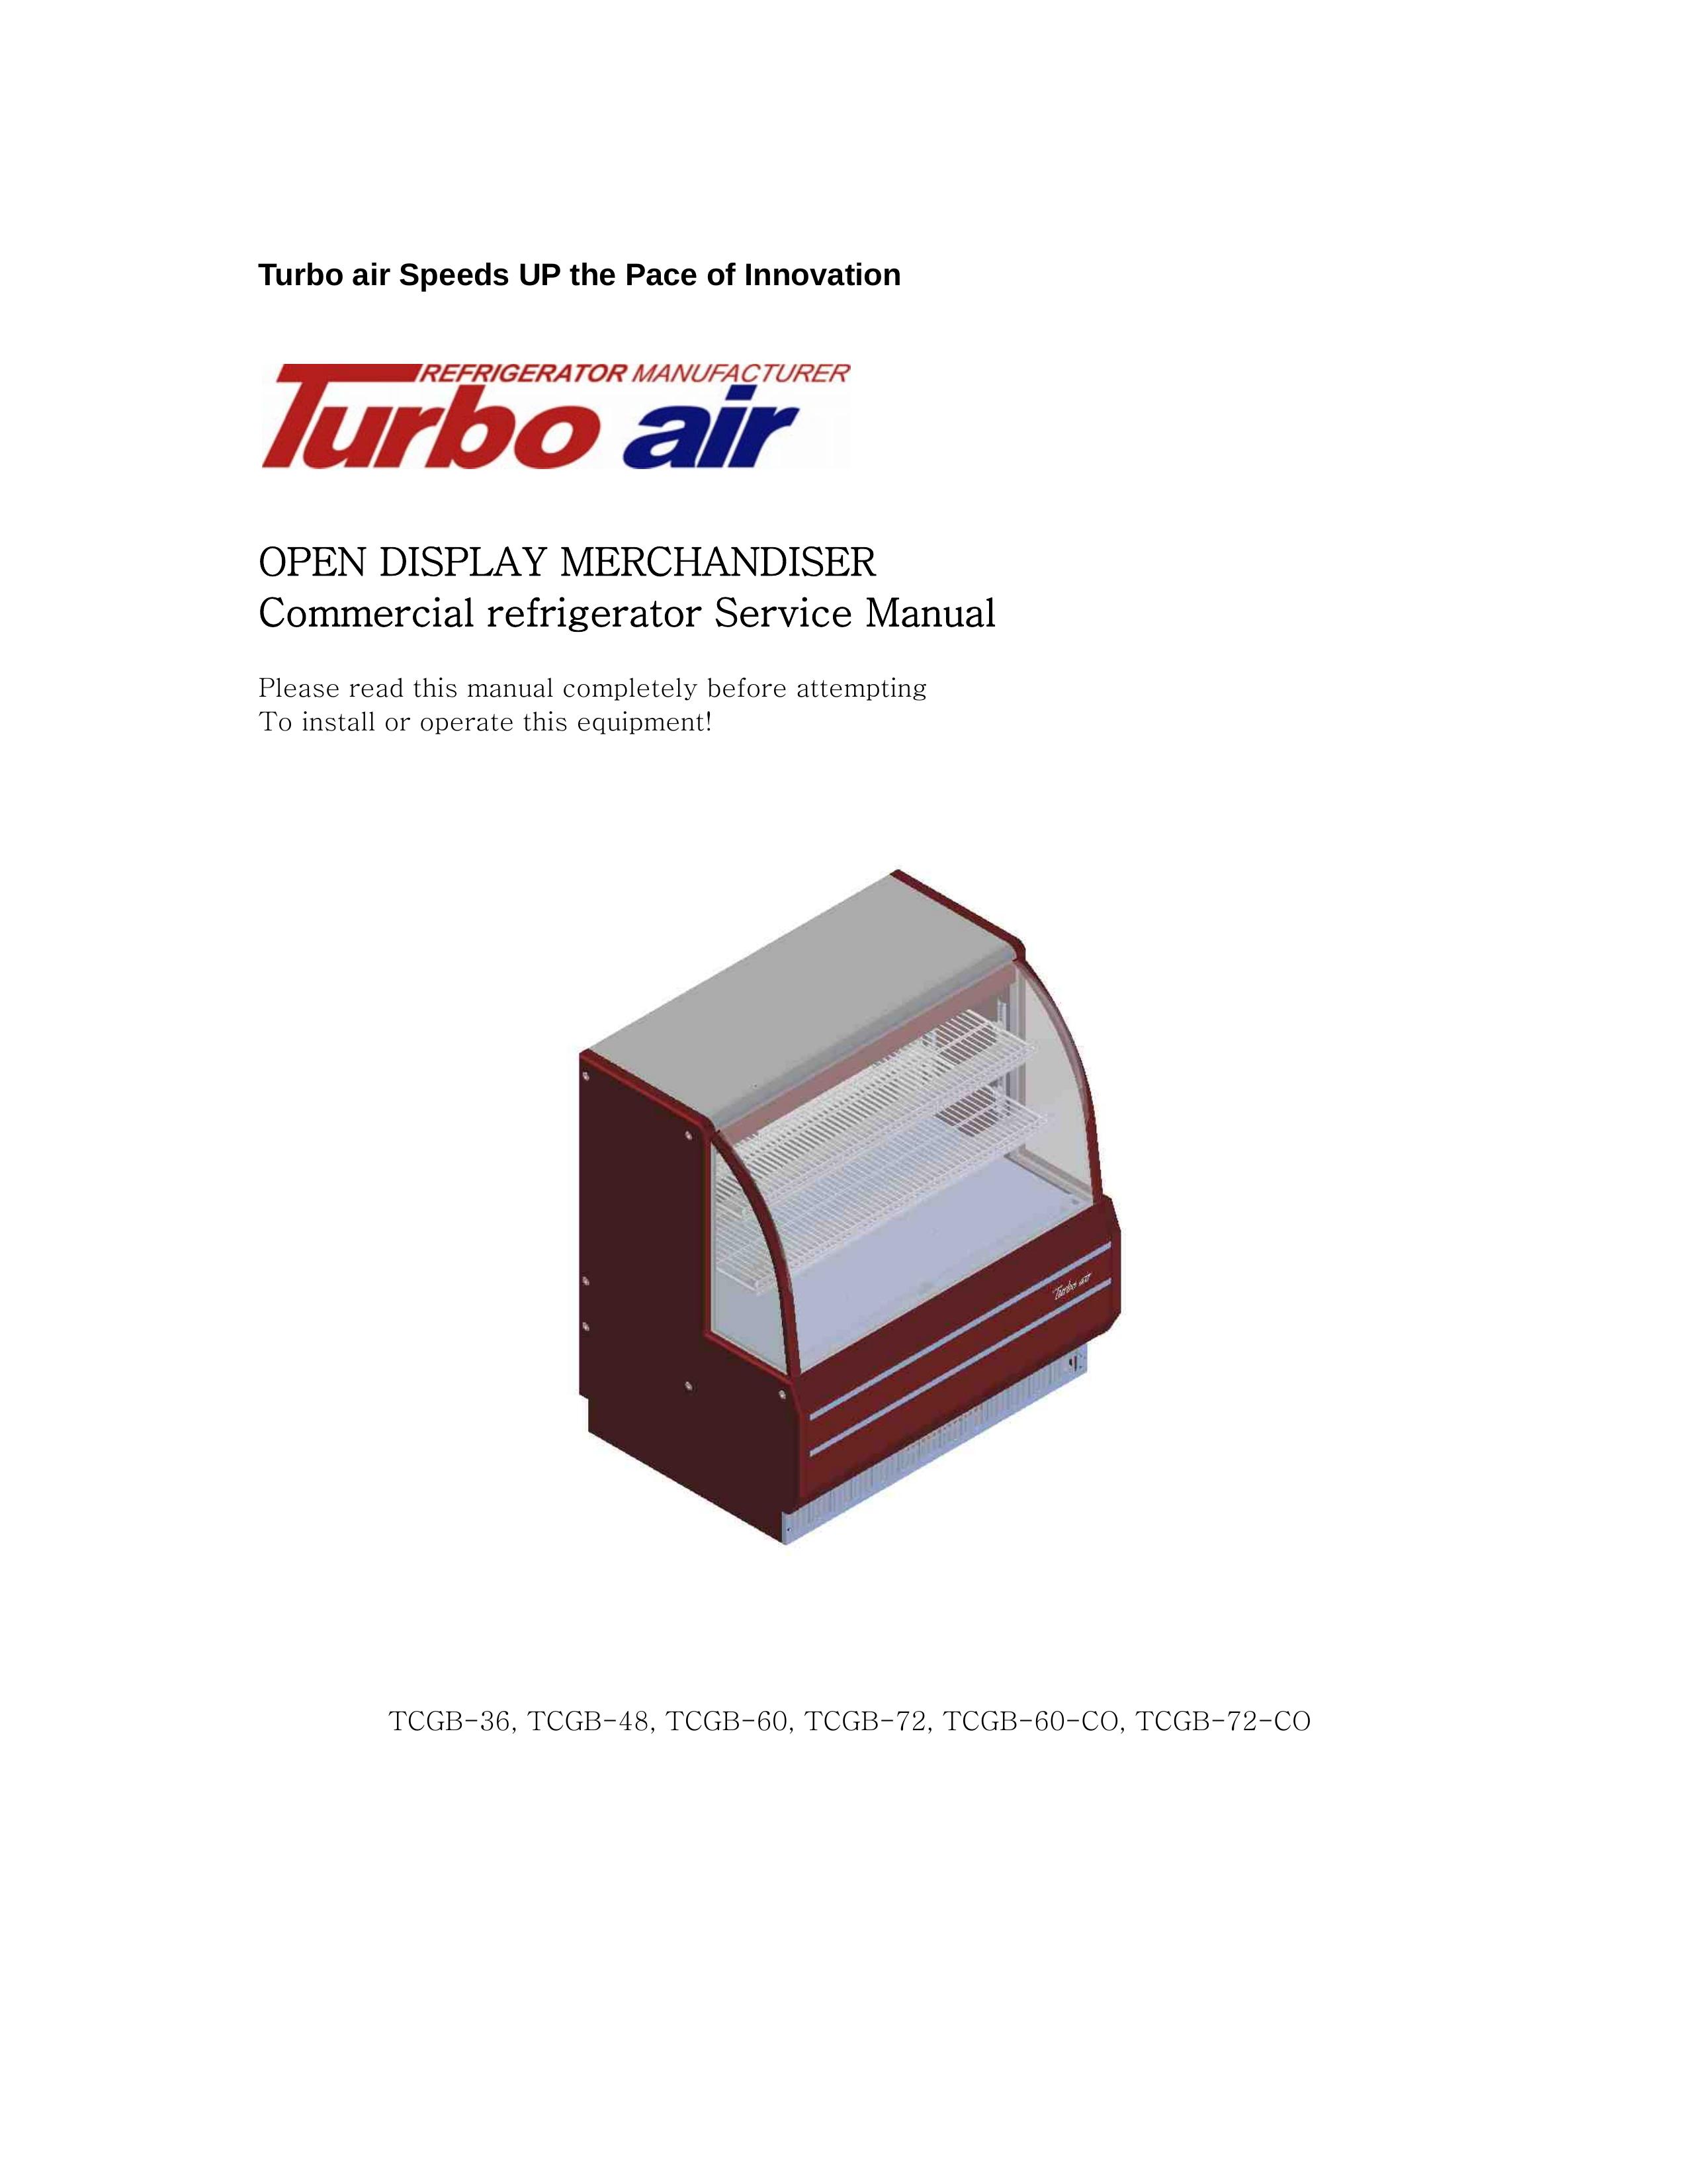 Turbo Air TCGB-48 Refrigerator User Manual